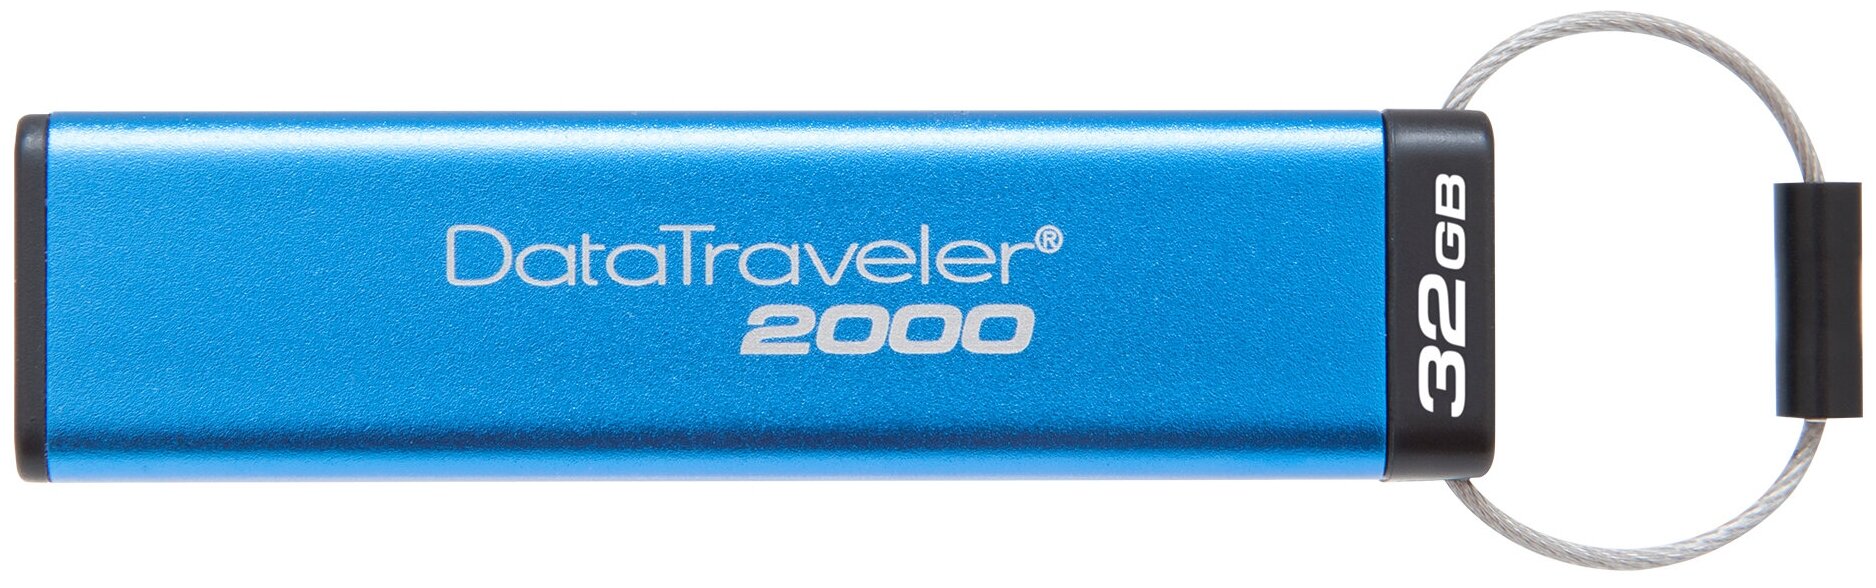 Флеш-память Kingston DataTraveler 2000, USB 3.0, шиф+клавиат, DT2000/64GB , 1 шт.